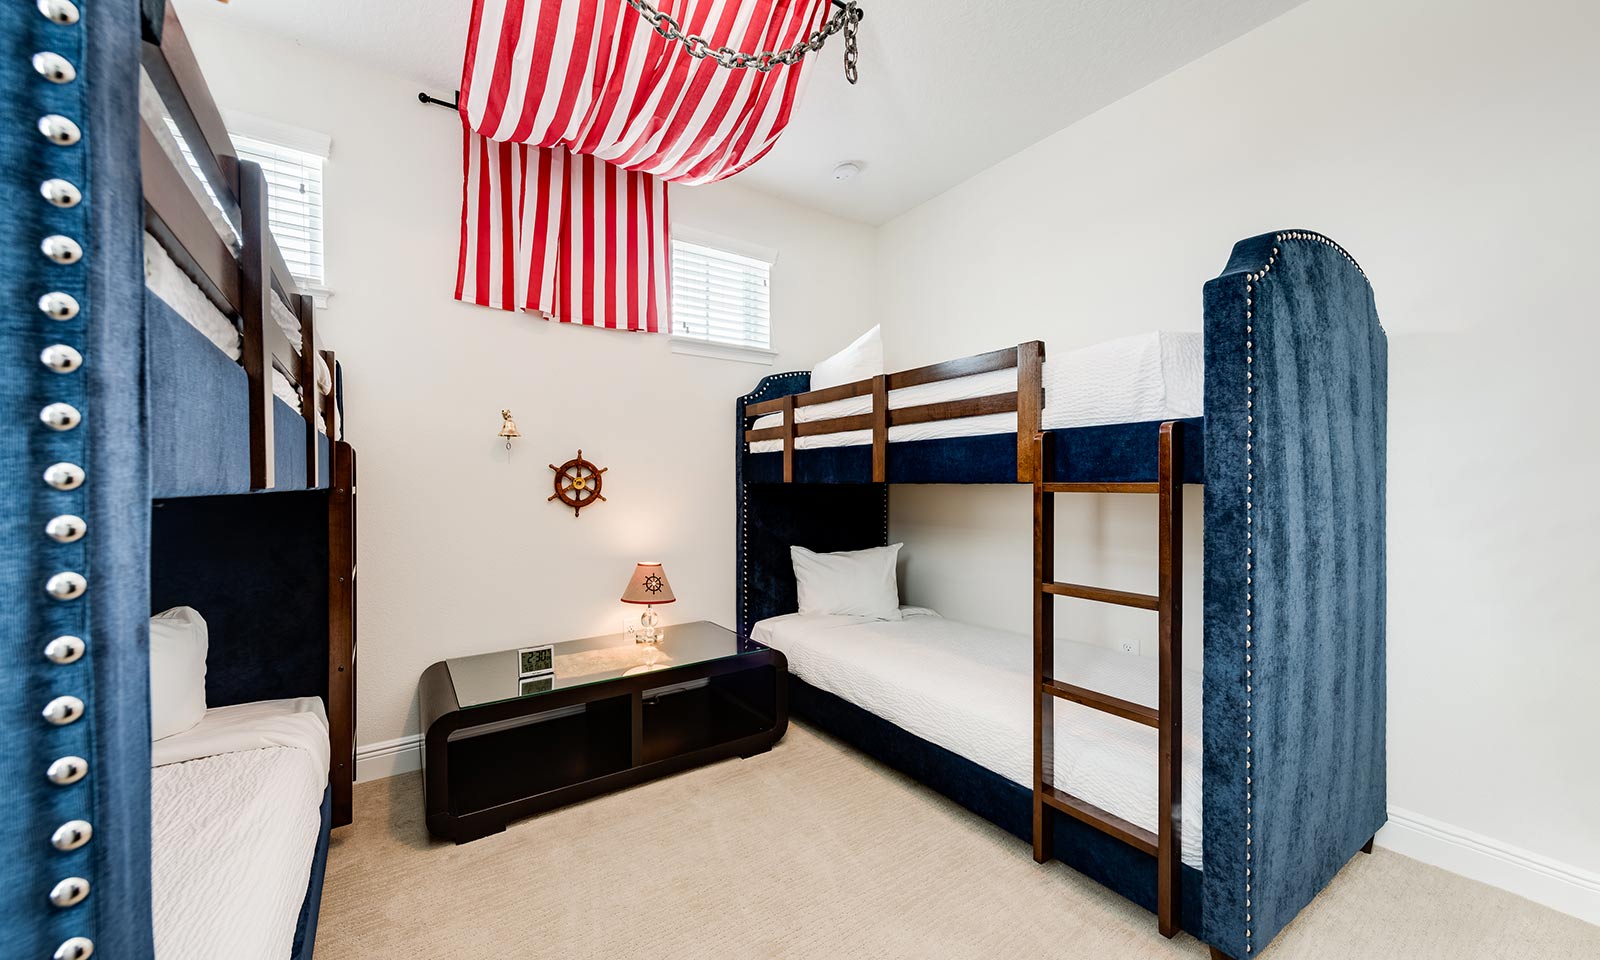 [amenities:bunkbed-room:2] Bunkbed Room